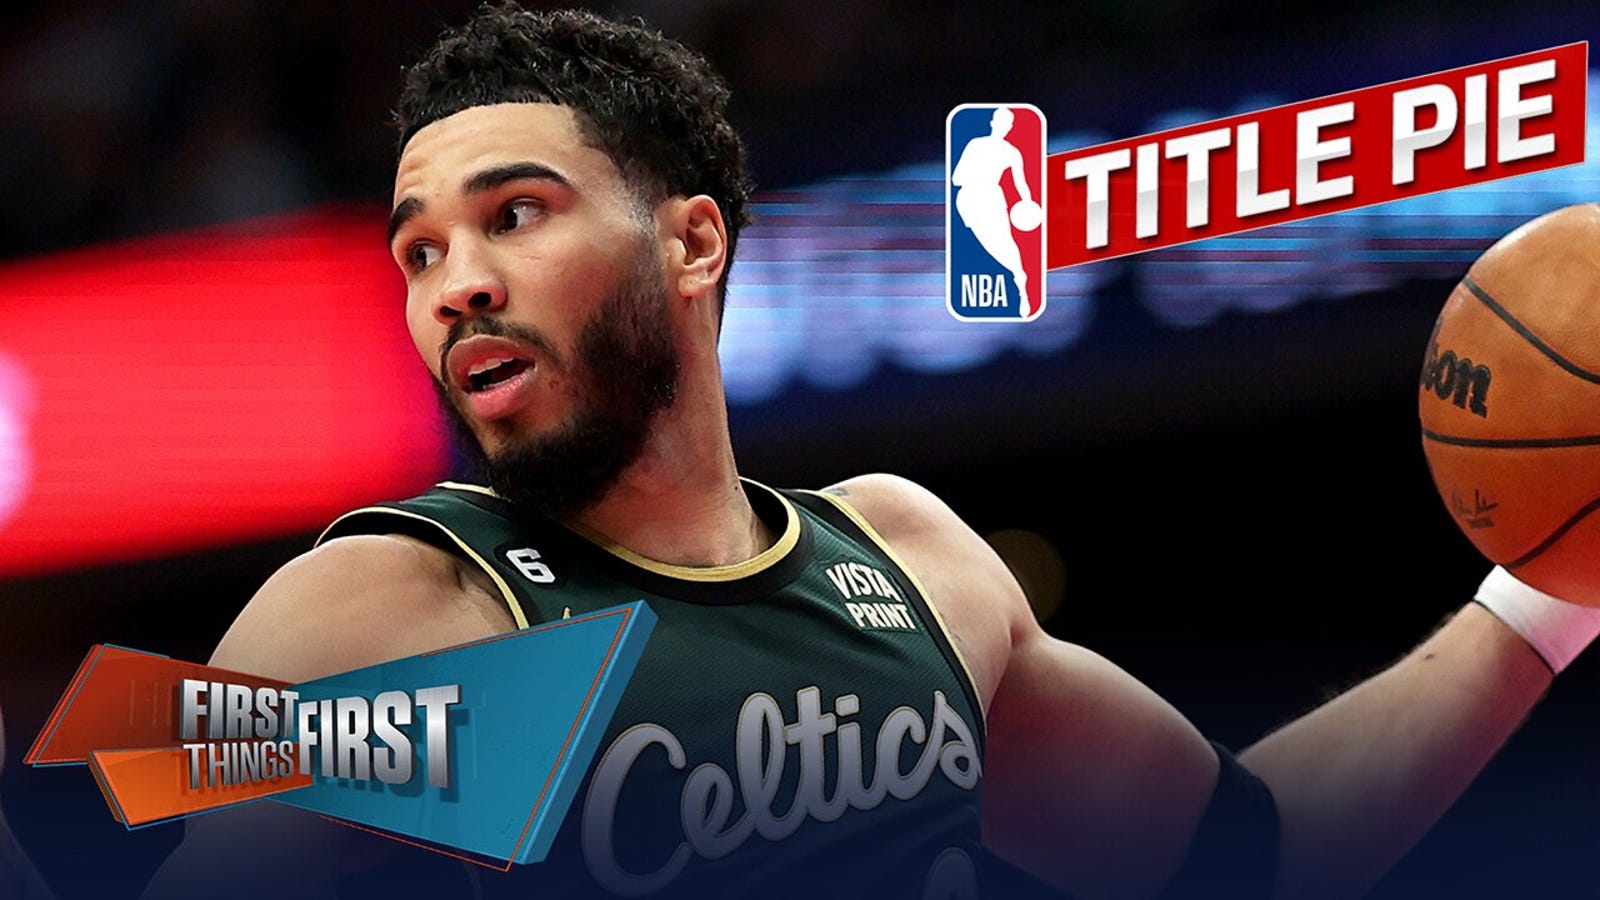 Celtics make a HUGE leap in Nick's latest NBA Title Pie